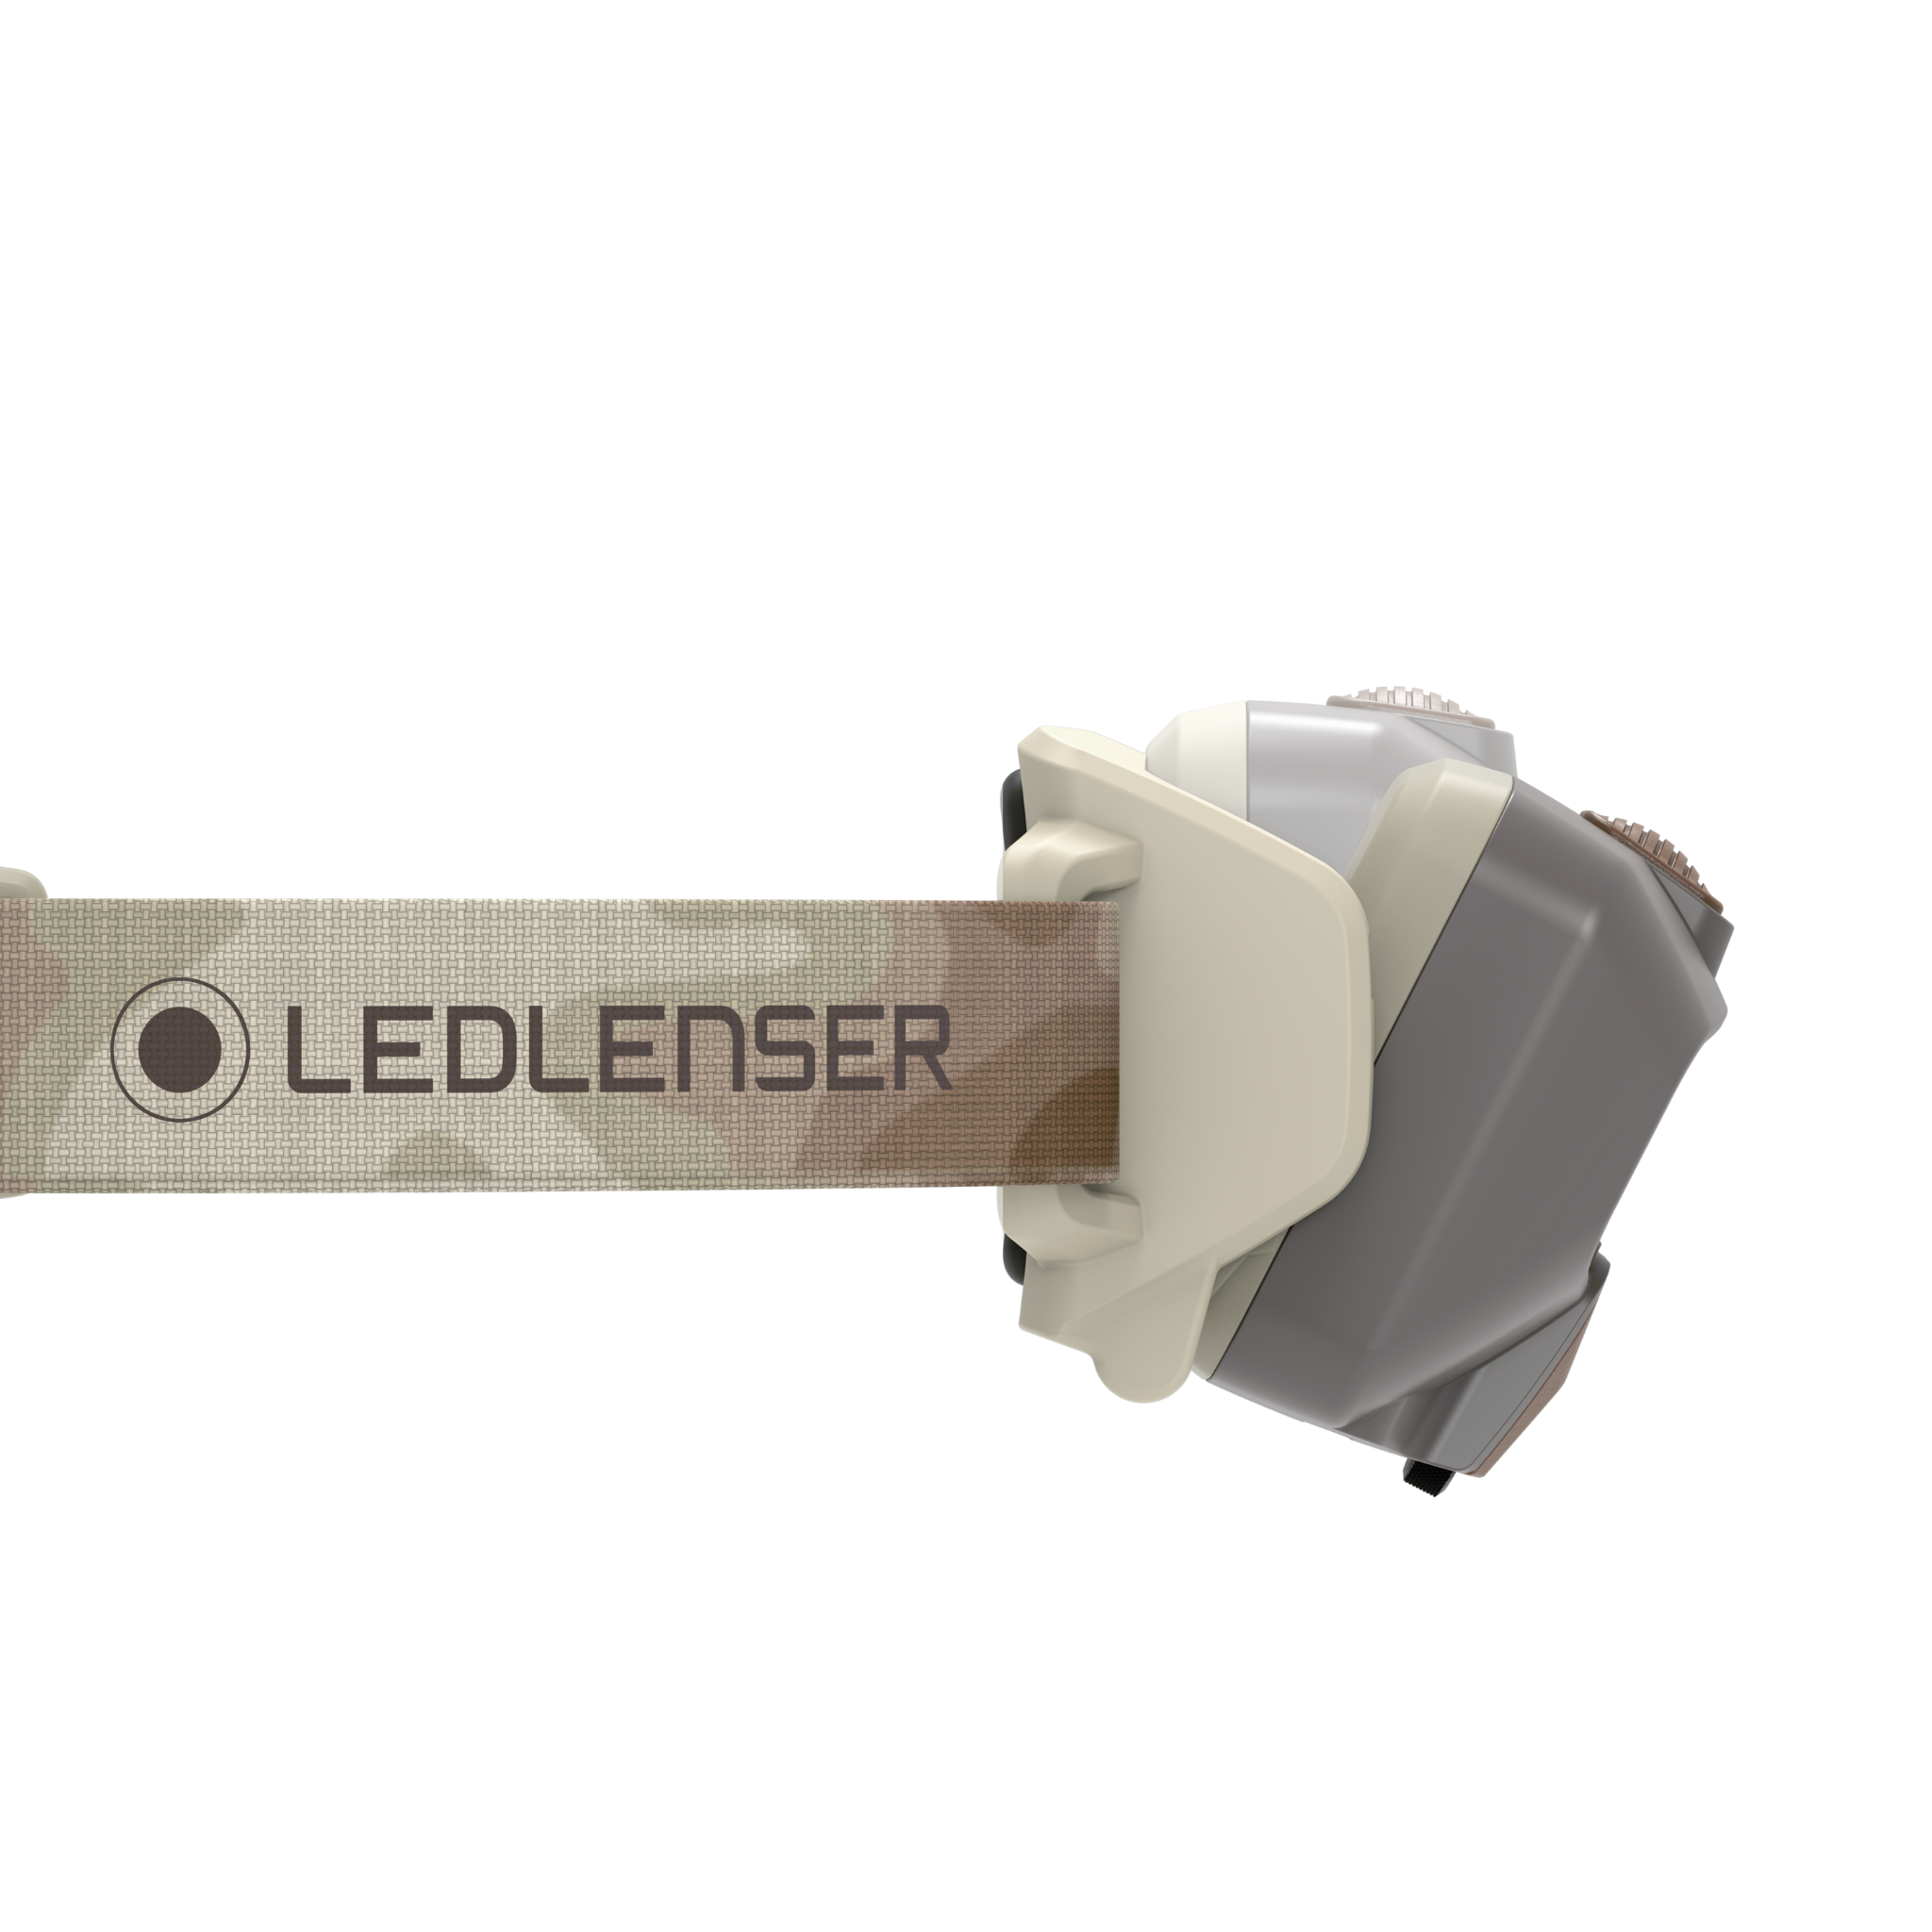 Ledlenser HF6R Signature Headlamp